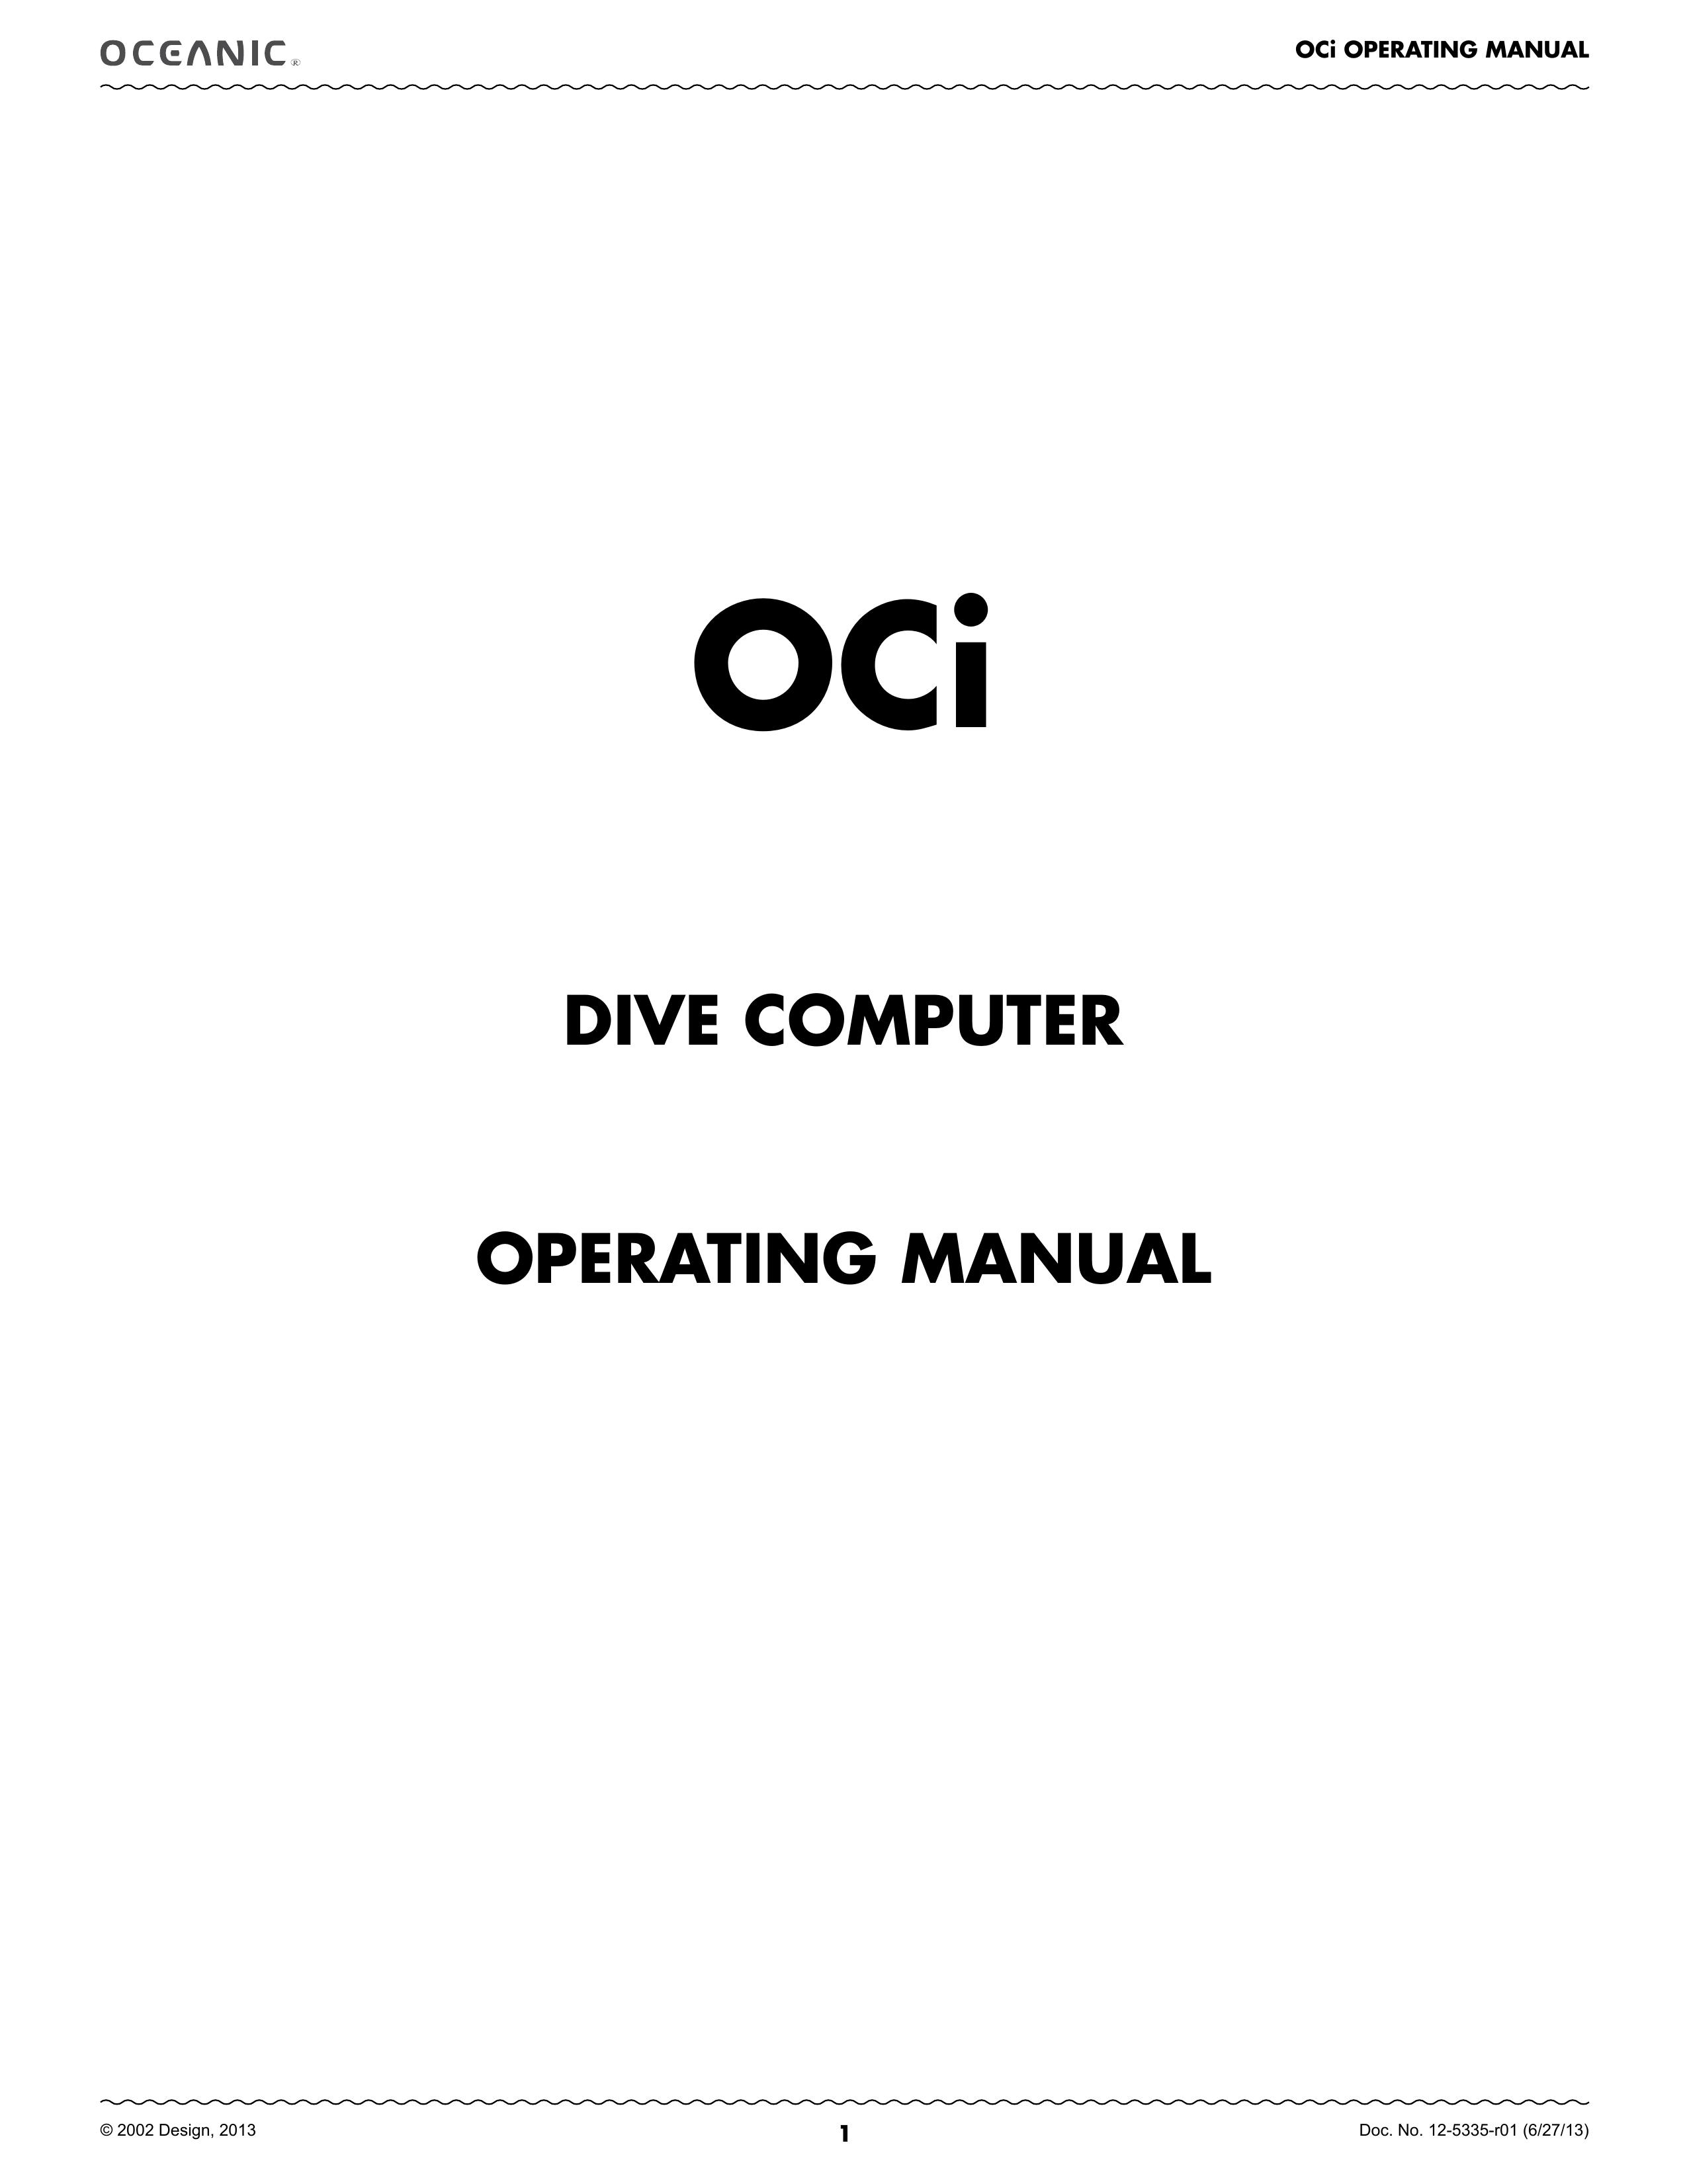 Oceanic 04-8791-07 Scuba Diving Equipment User Manual